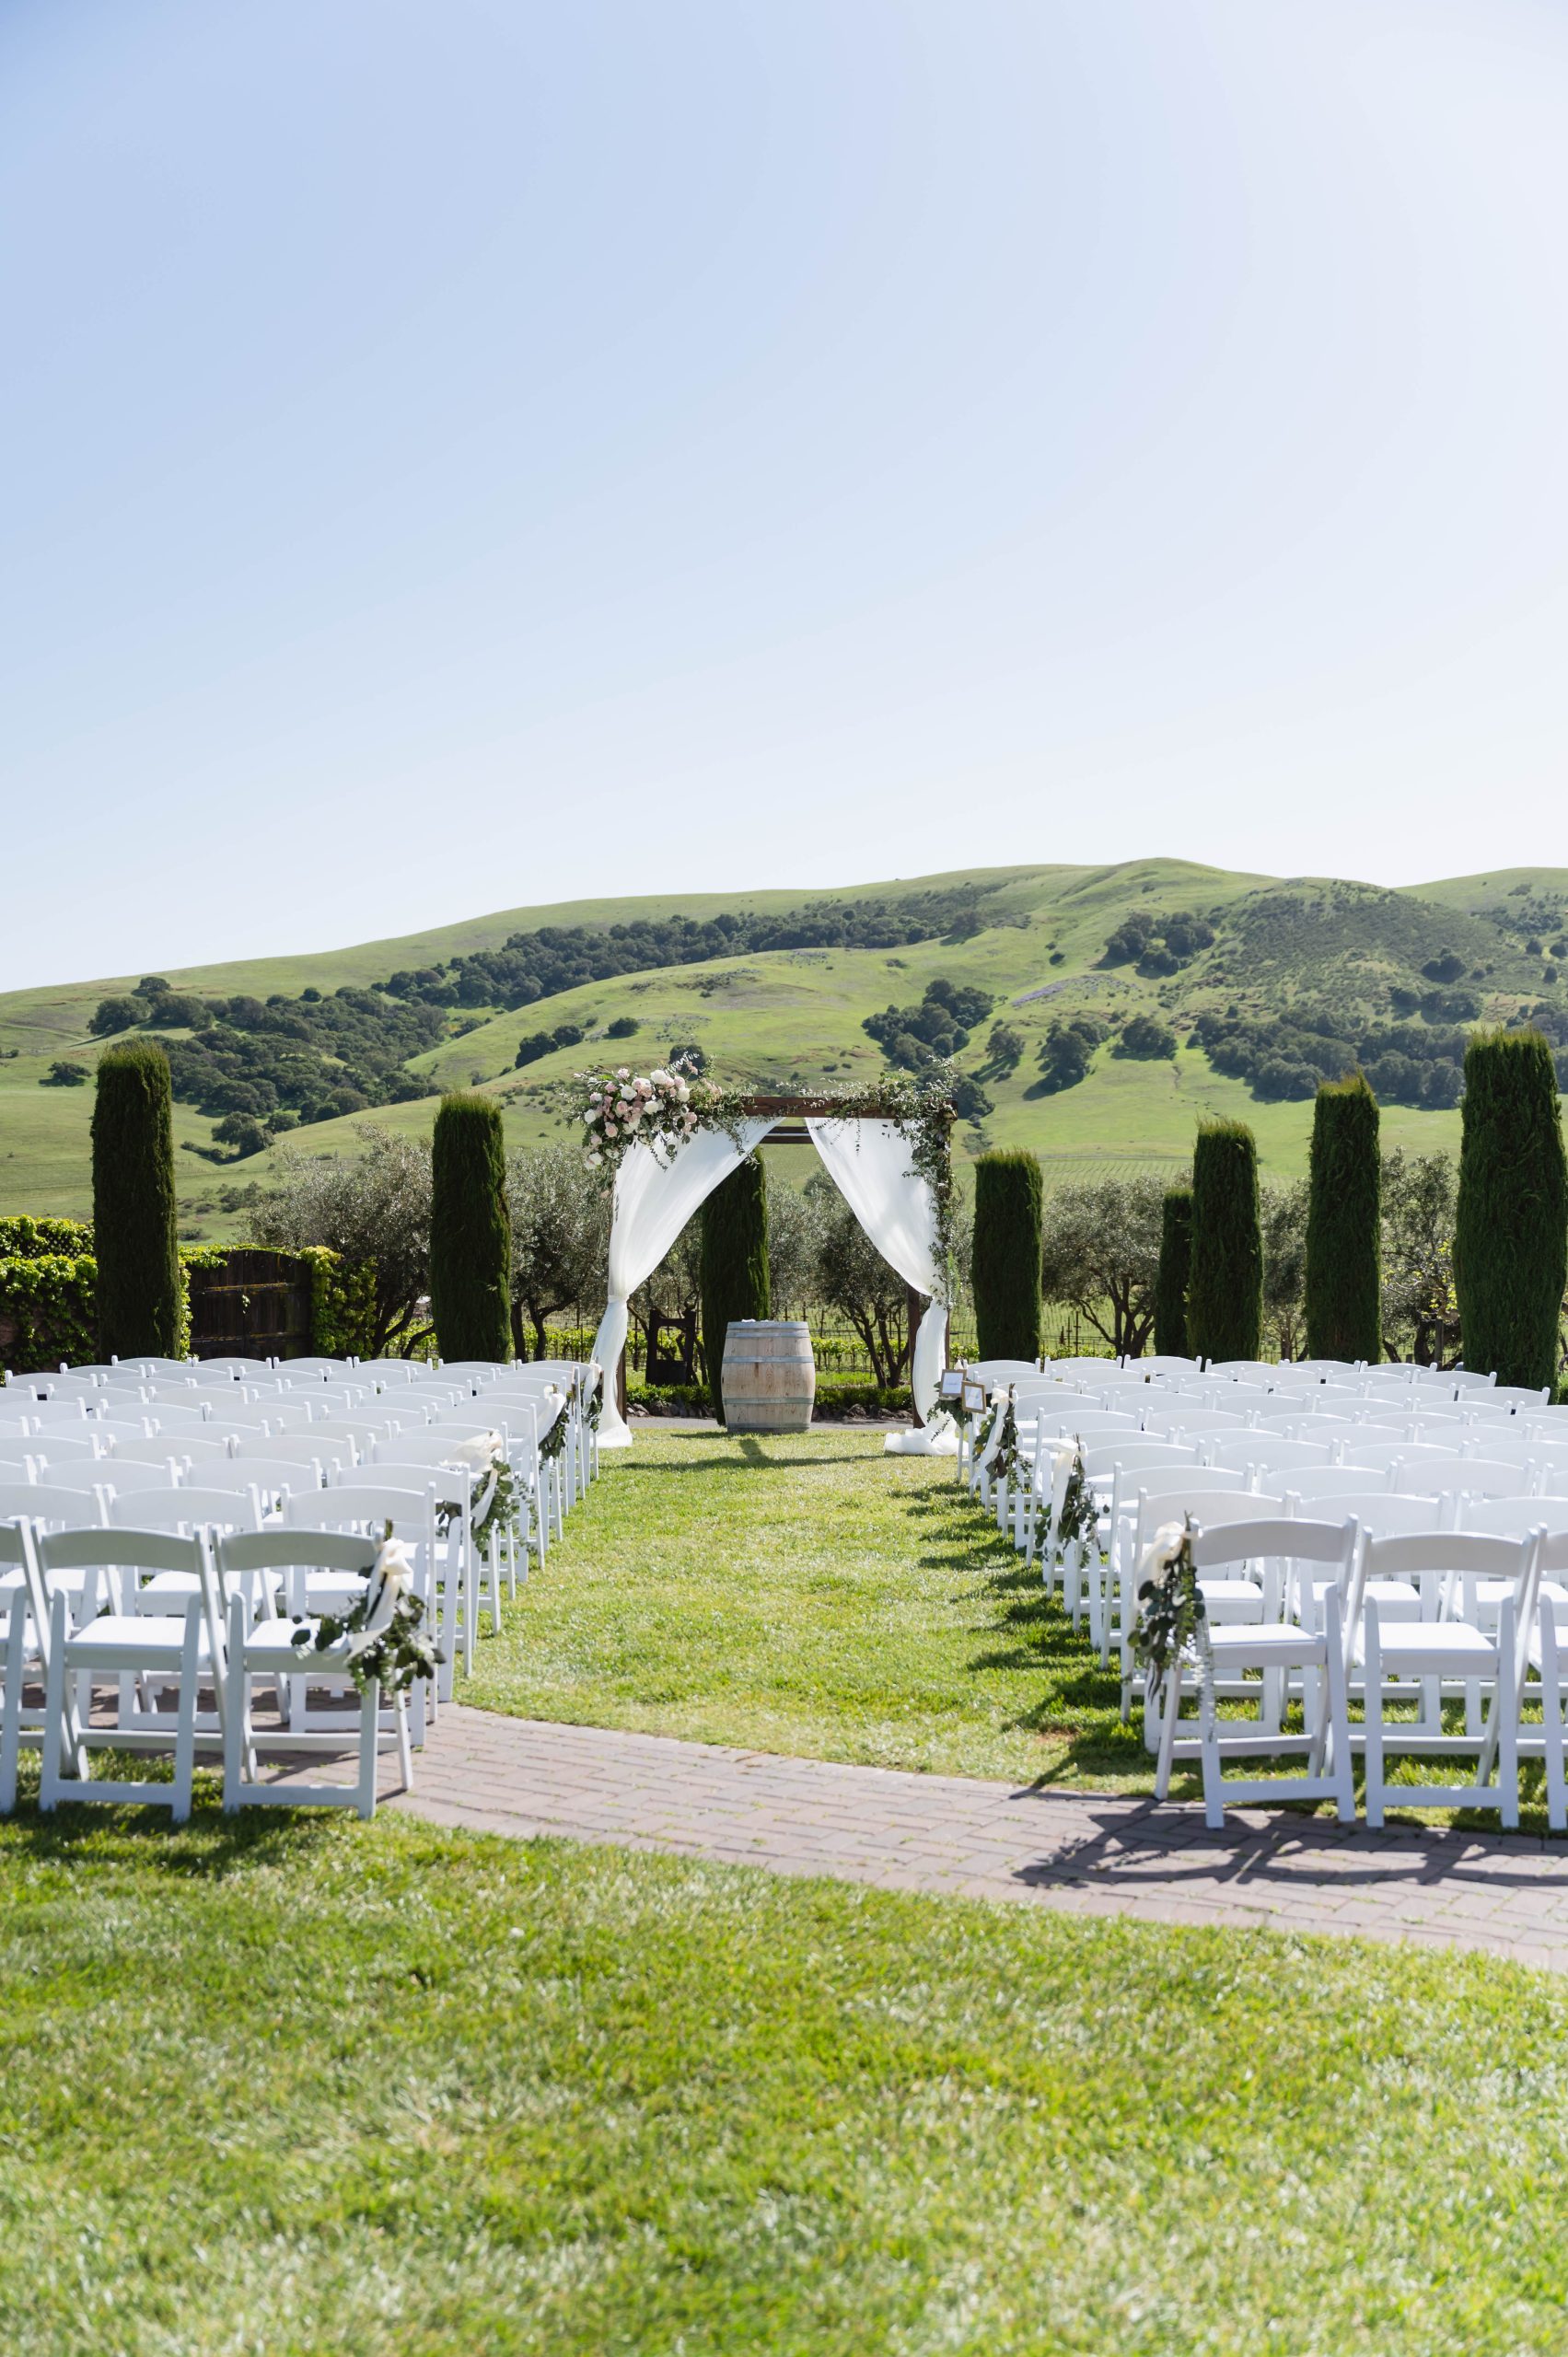 Ceremony Soft Romantic + Minimalistic Wedding at Viansa Winery in Sonoma Jen Vazquez Photography